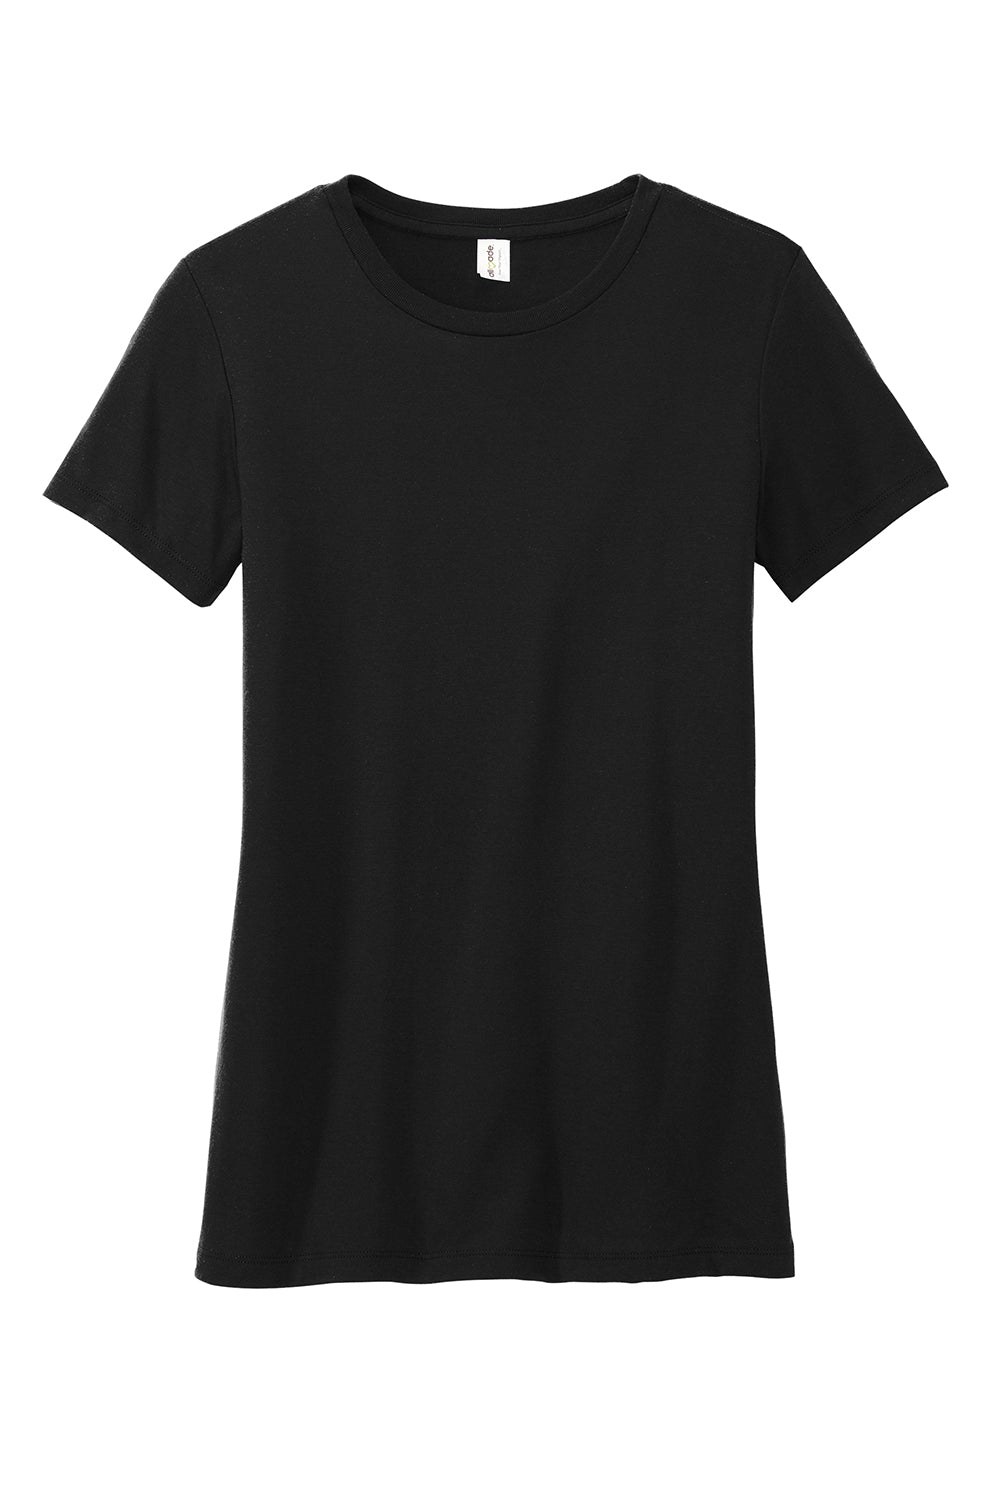 Allmade AL2008 Mens Short Sleeve Crewneck T-Shirt Deep Black Flat Front